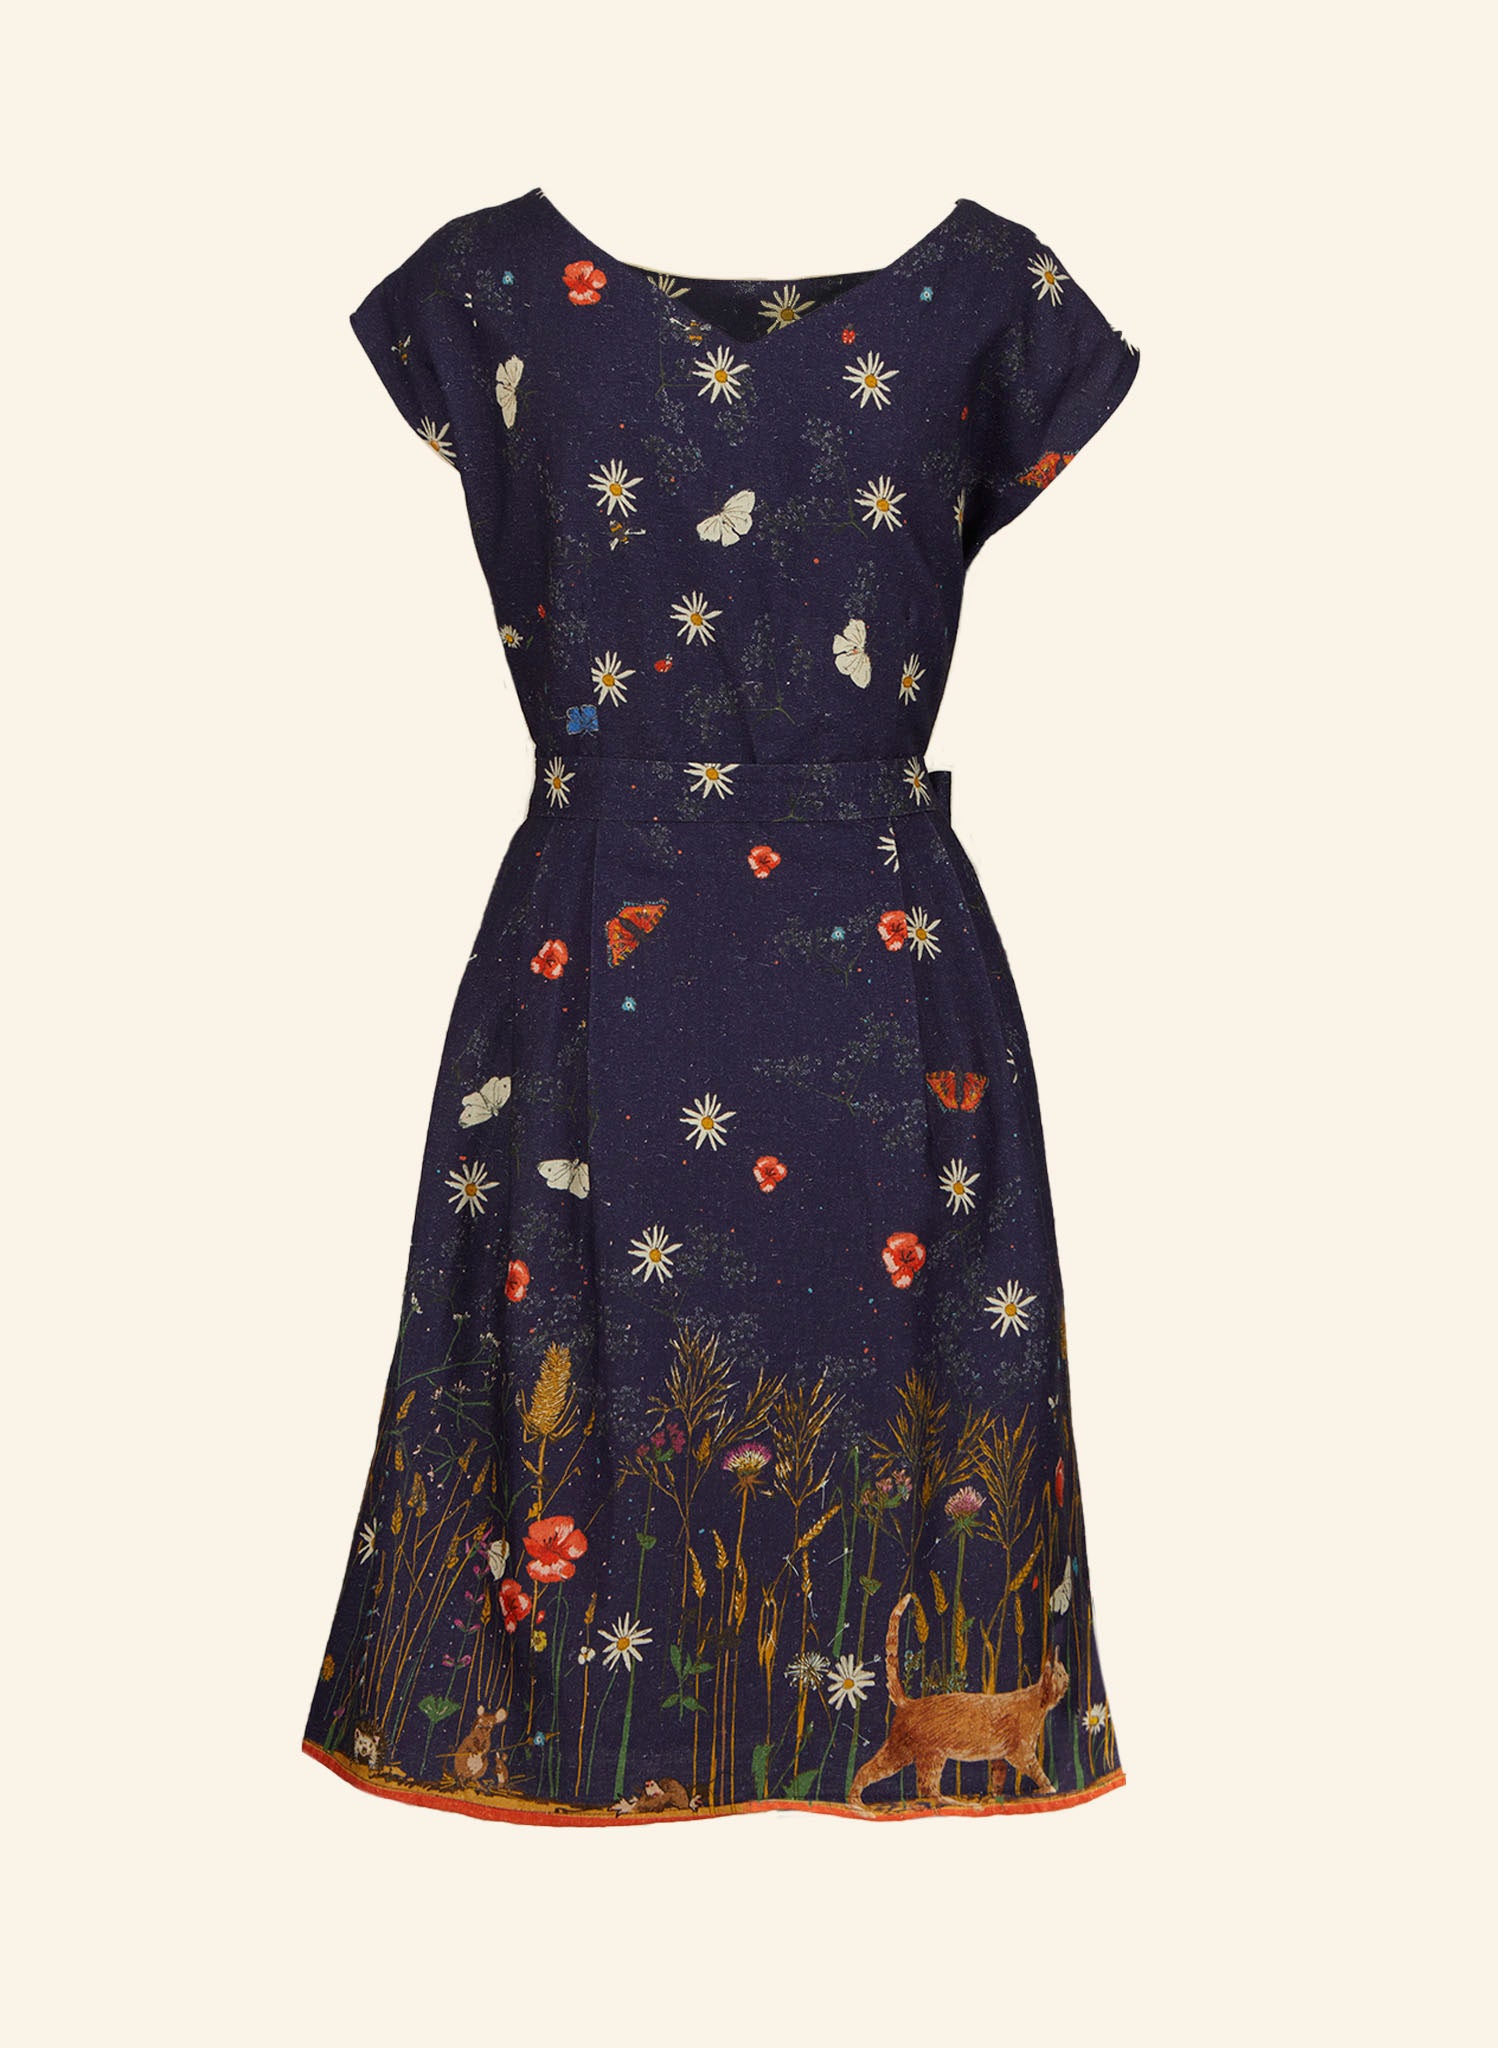 Beatrice Cap - Navy Cornfield Dress